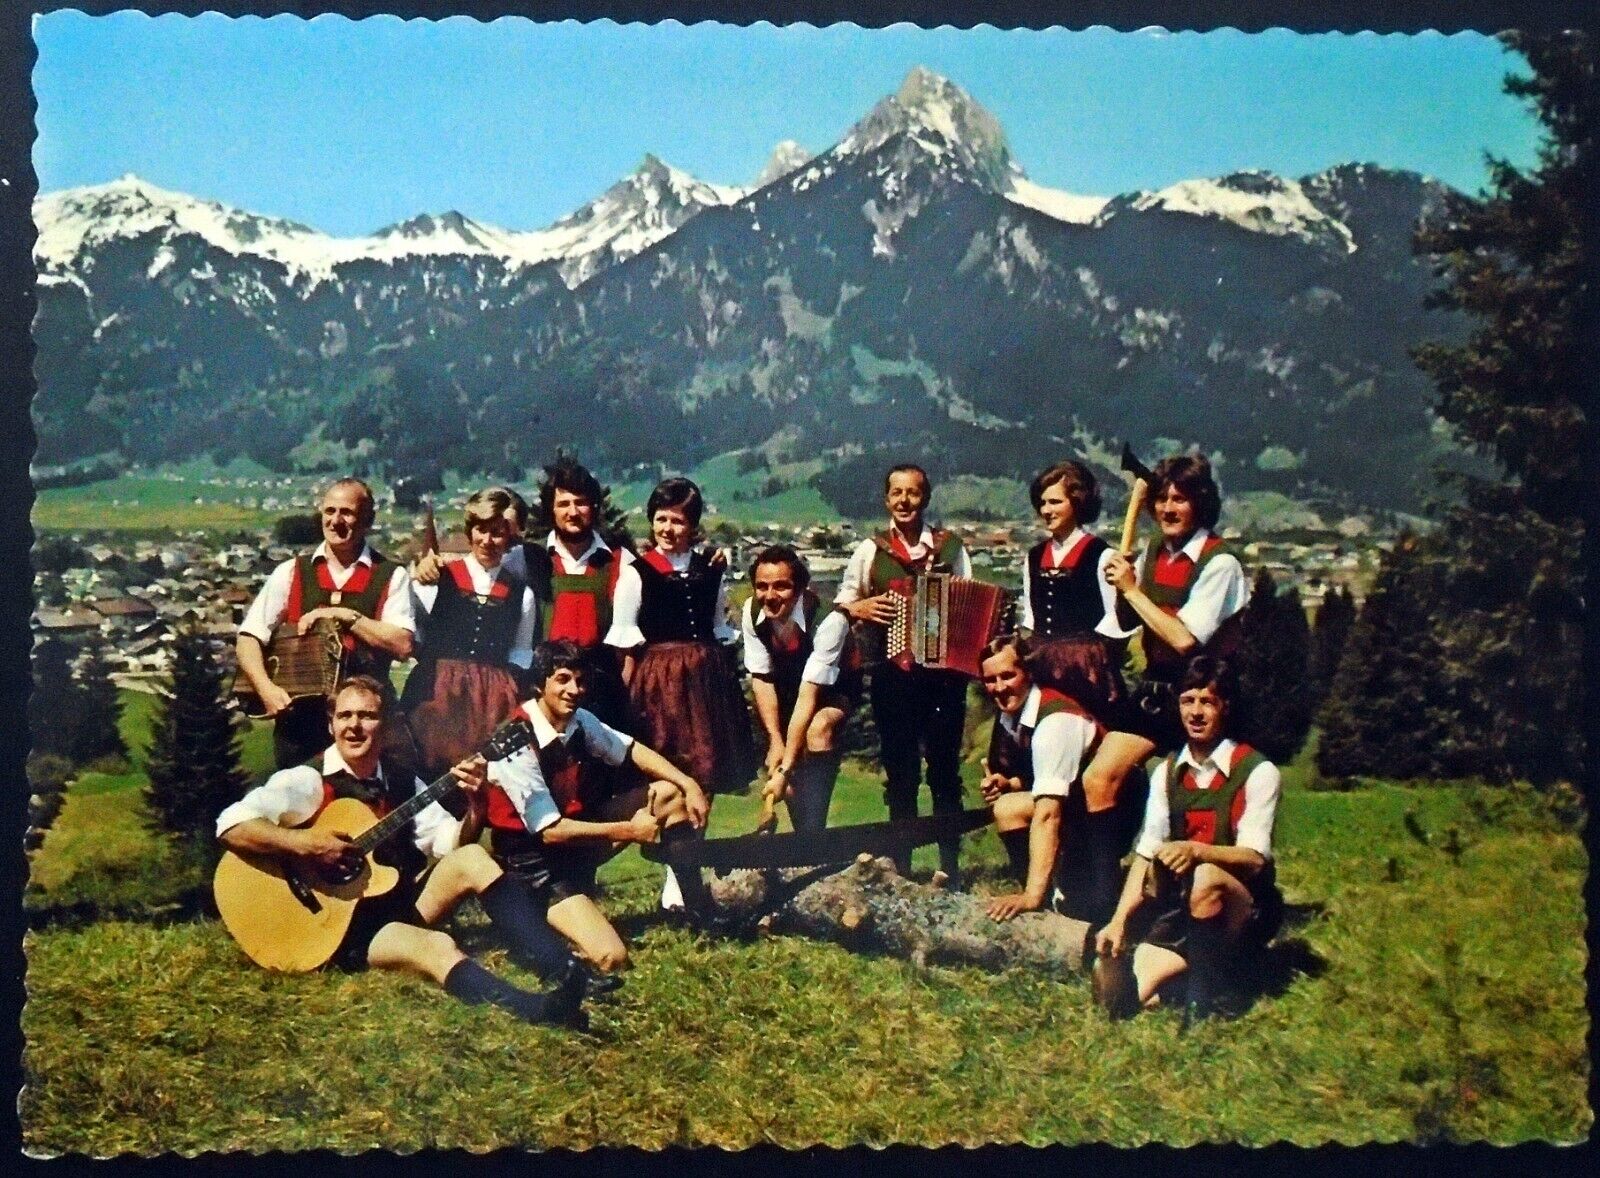 Austrian Traditional Costumes, Musicians, Gehrenspitze, Reutte, Austria